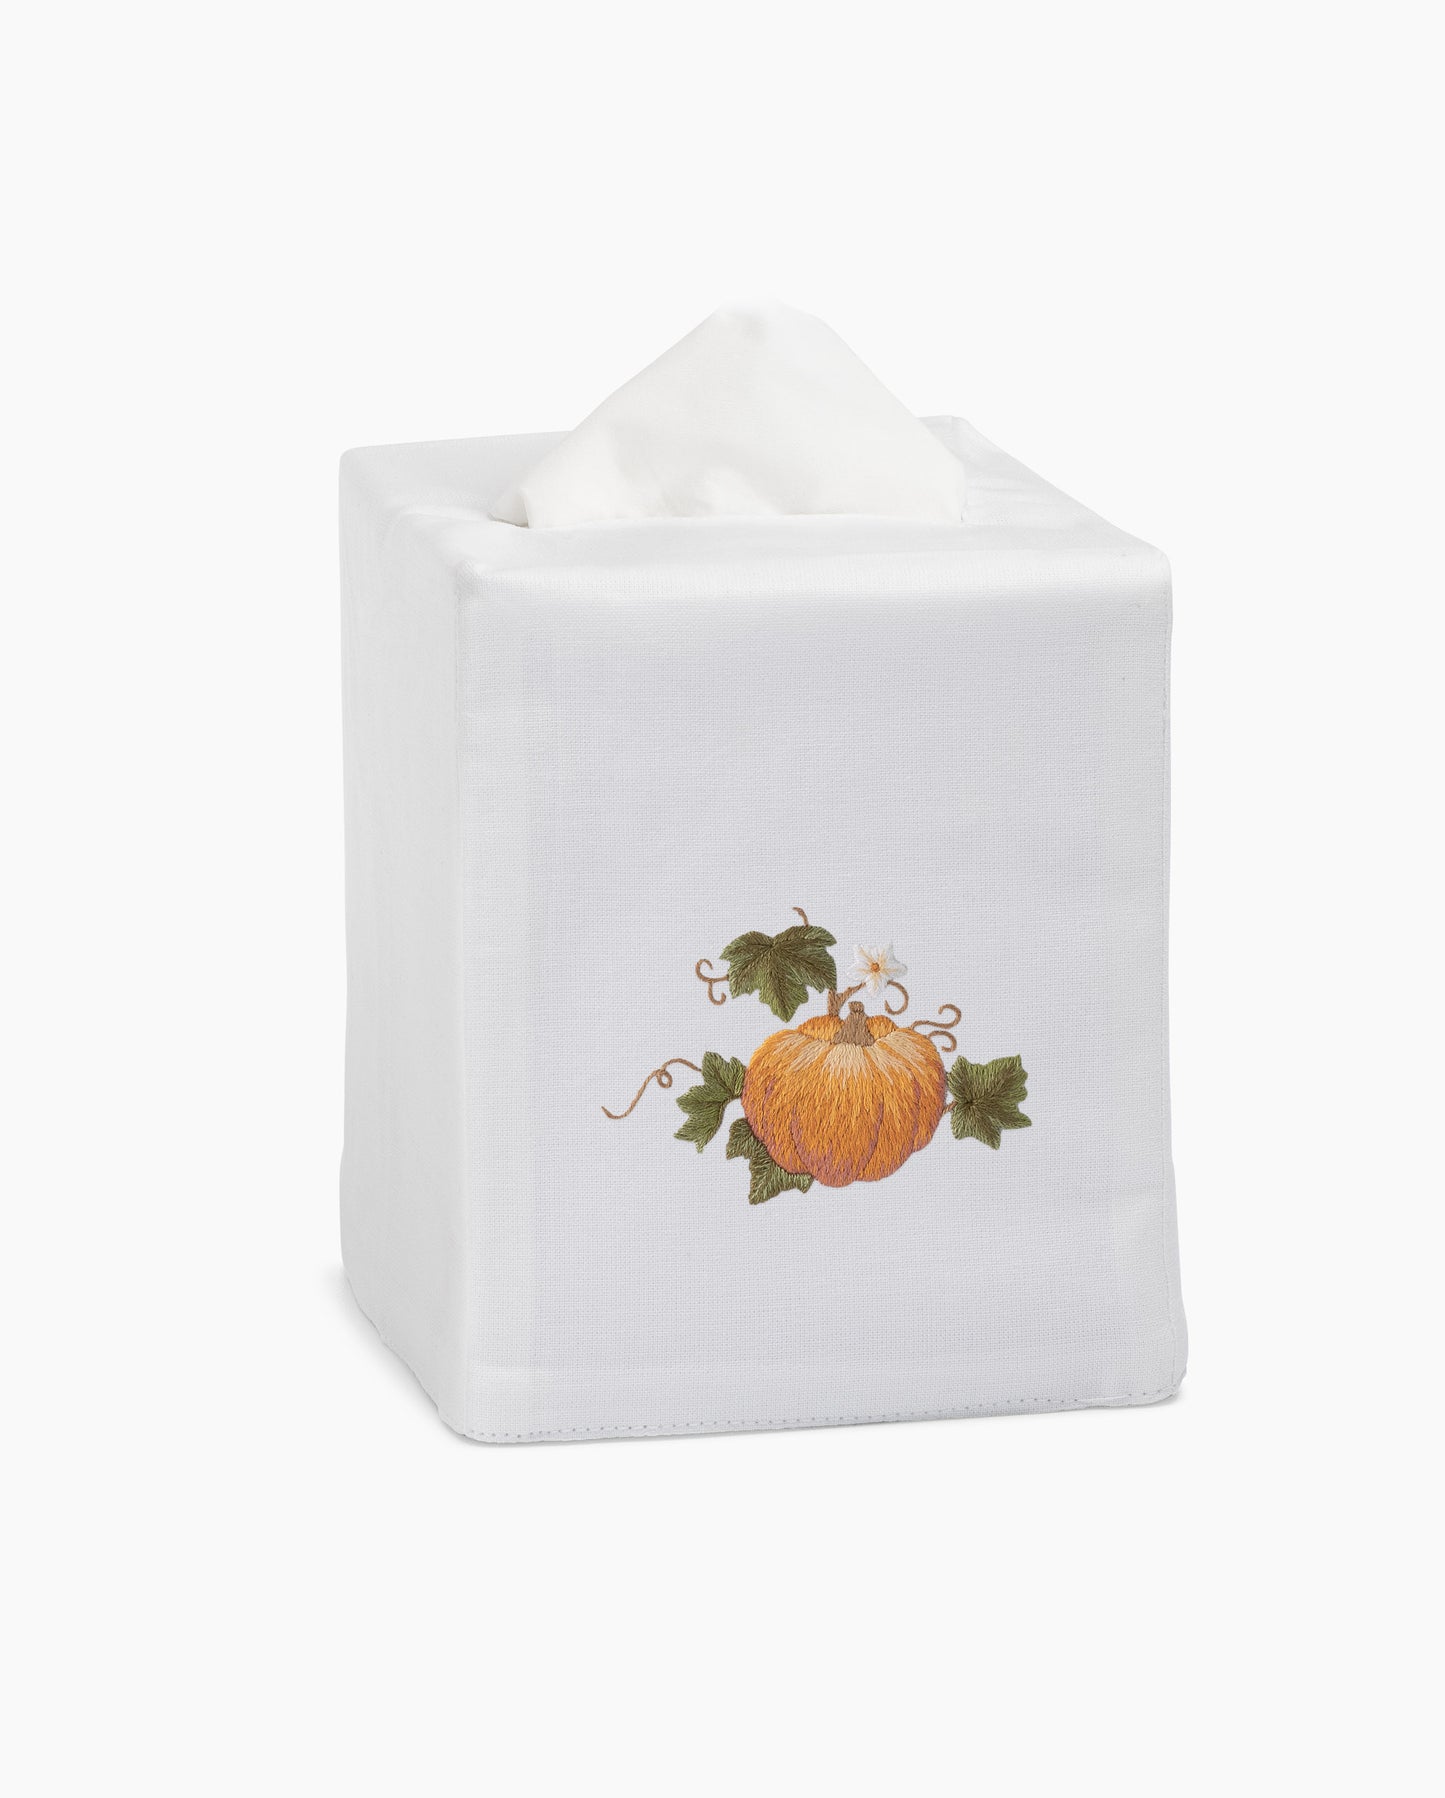 Pumpkins Grande Tissue Box Cover